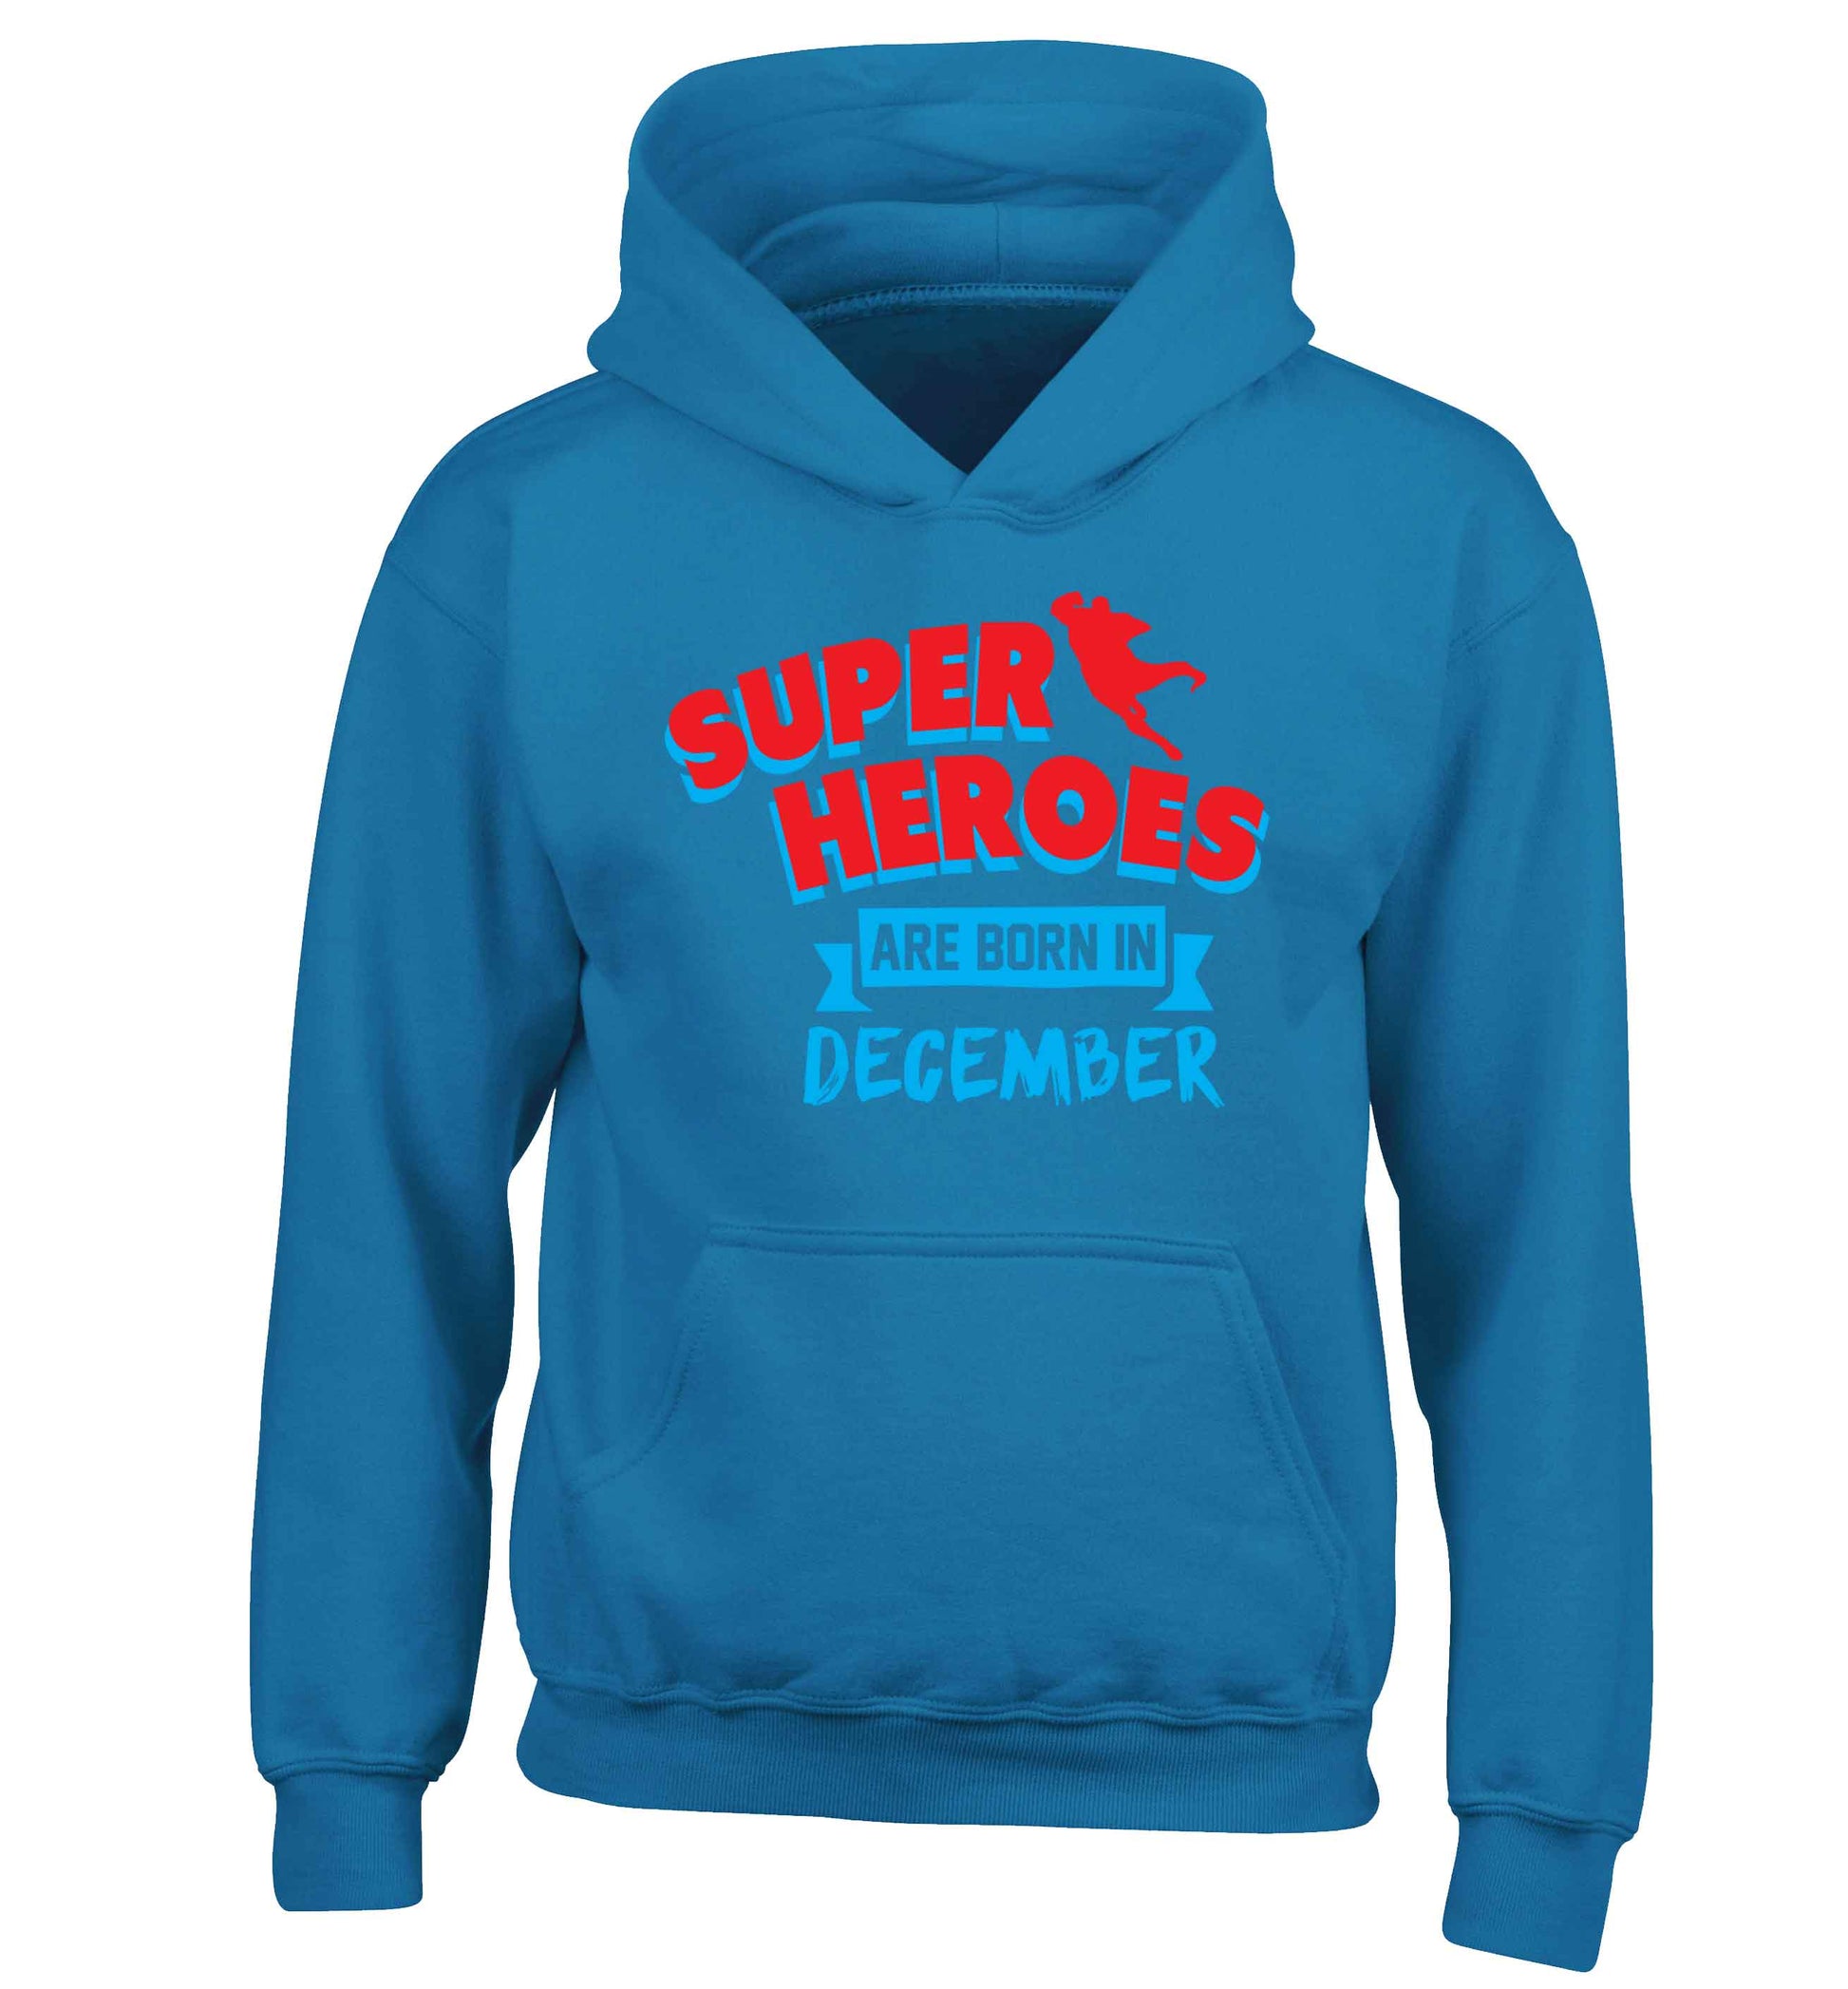 Superheroes are born in December children's blue hoodie 12-13 Years